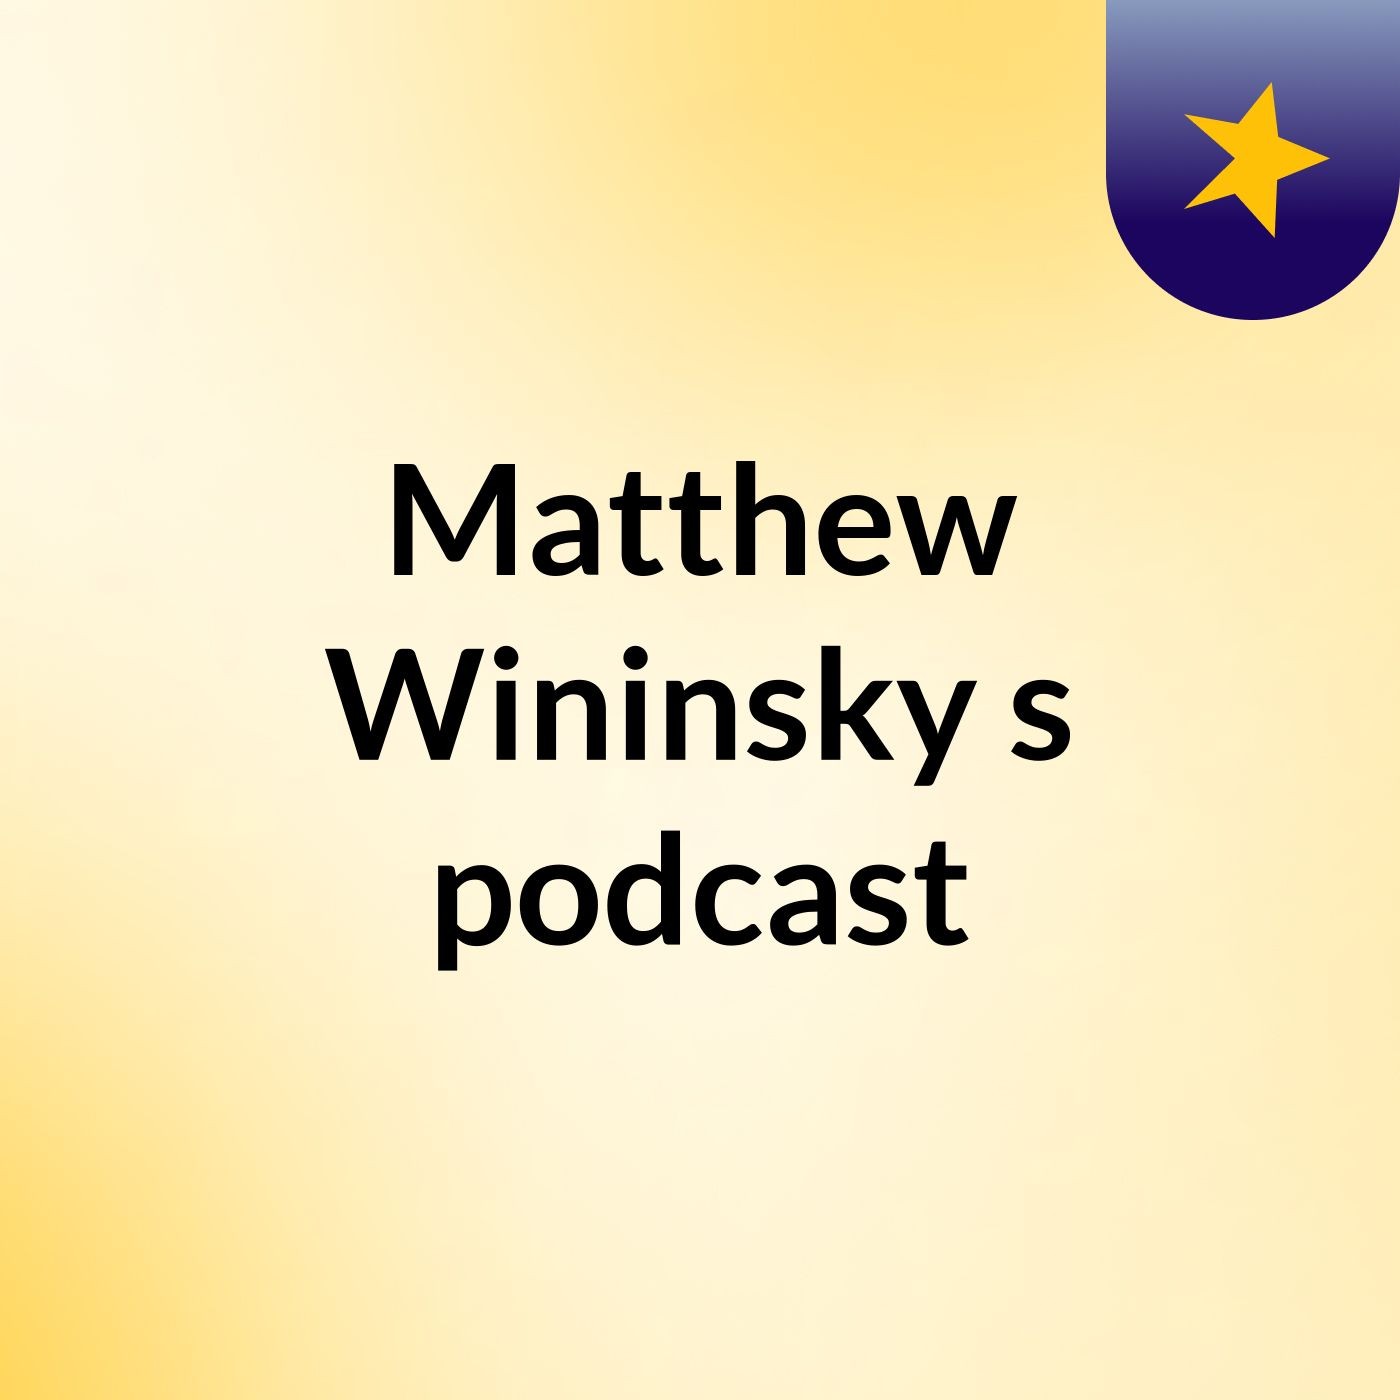 Matthew Wininsky's podcast